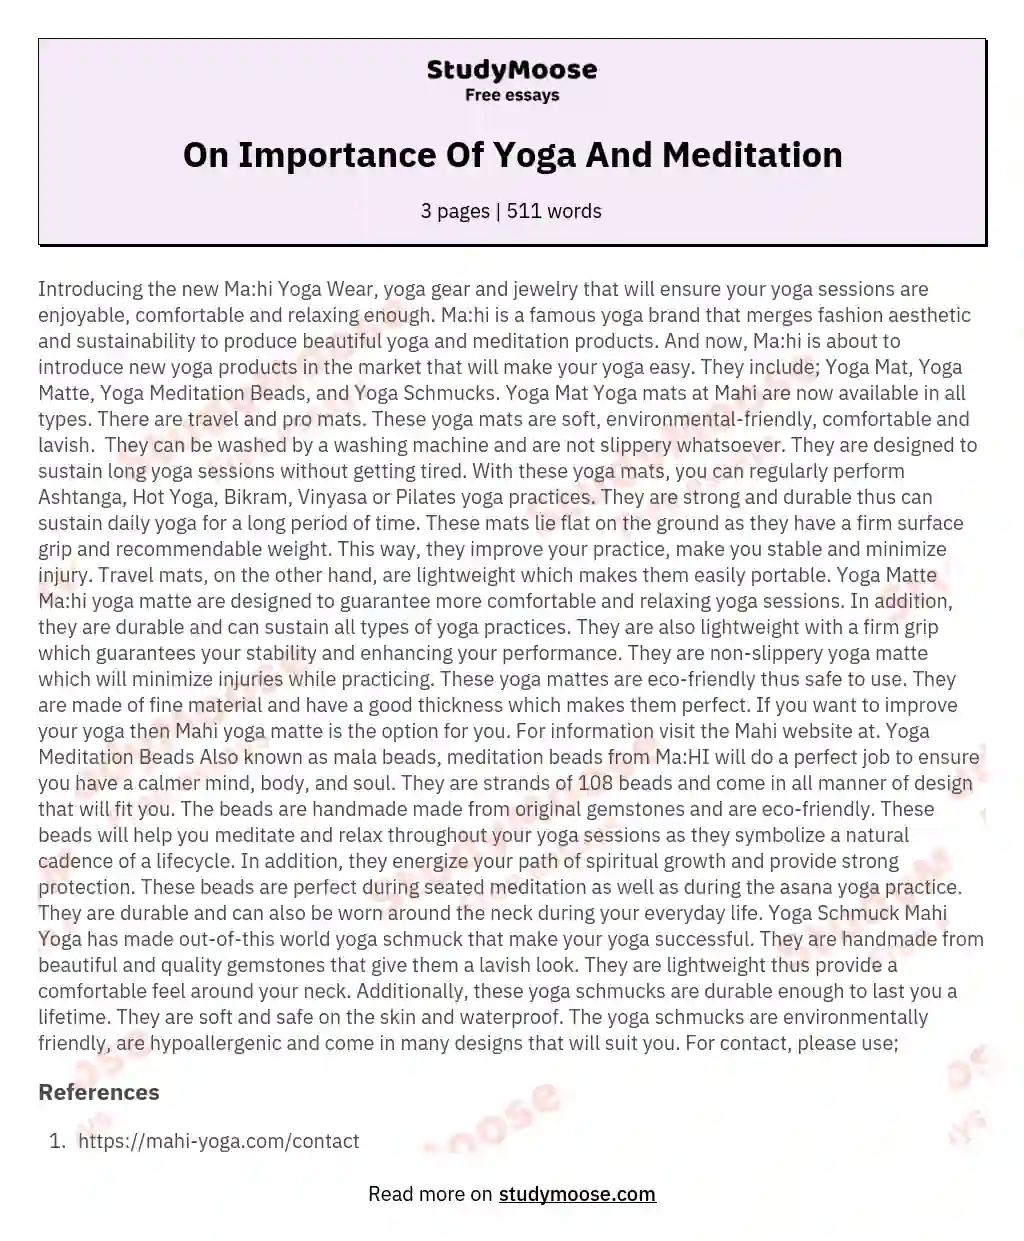 On Importance Of Yoga And Meditation essay